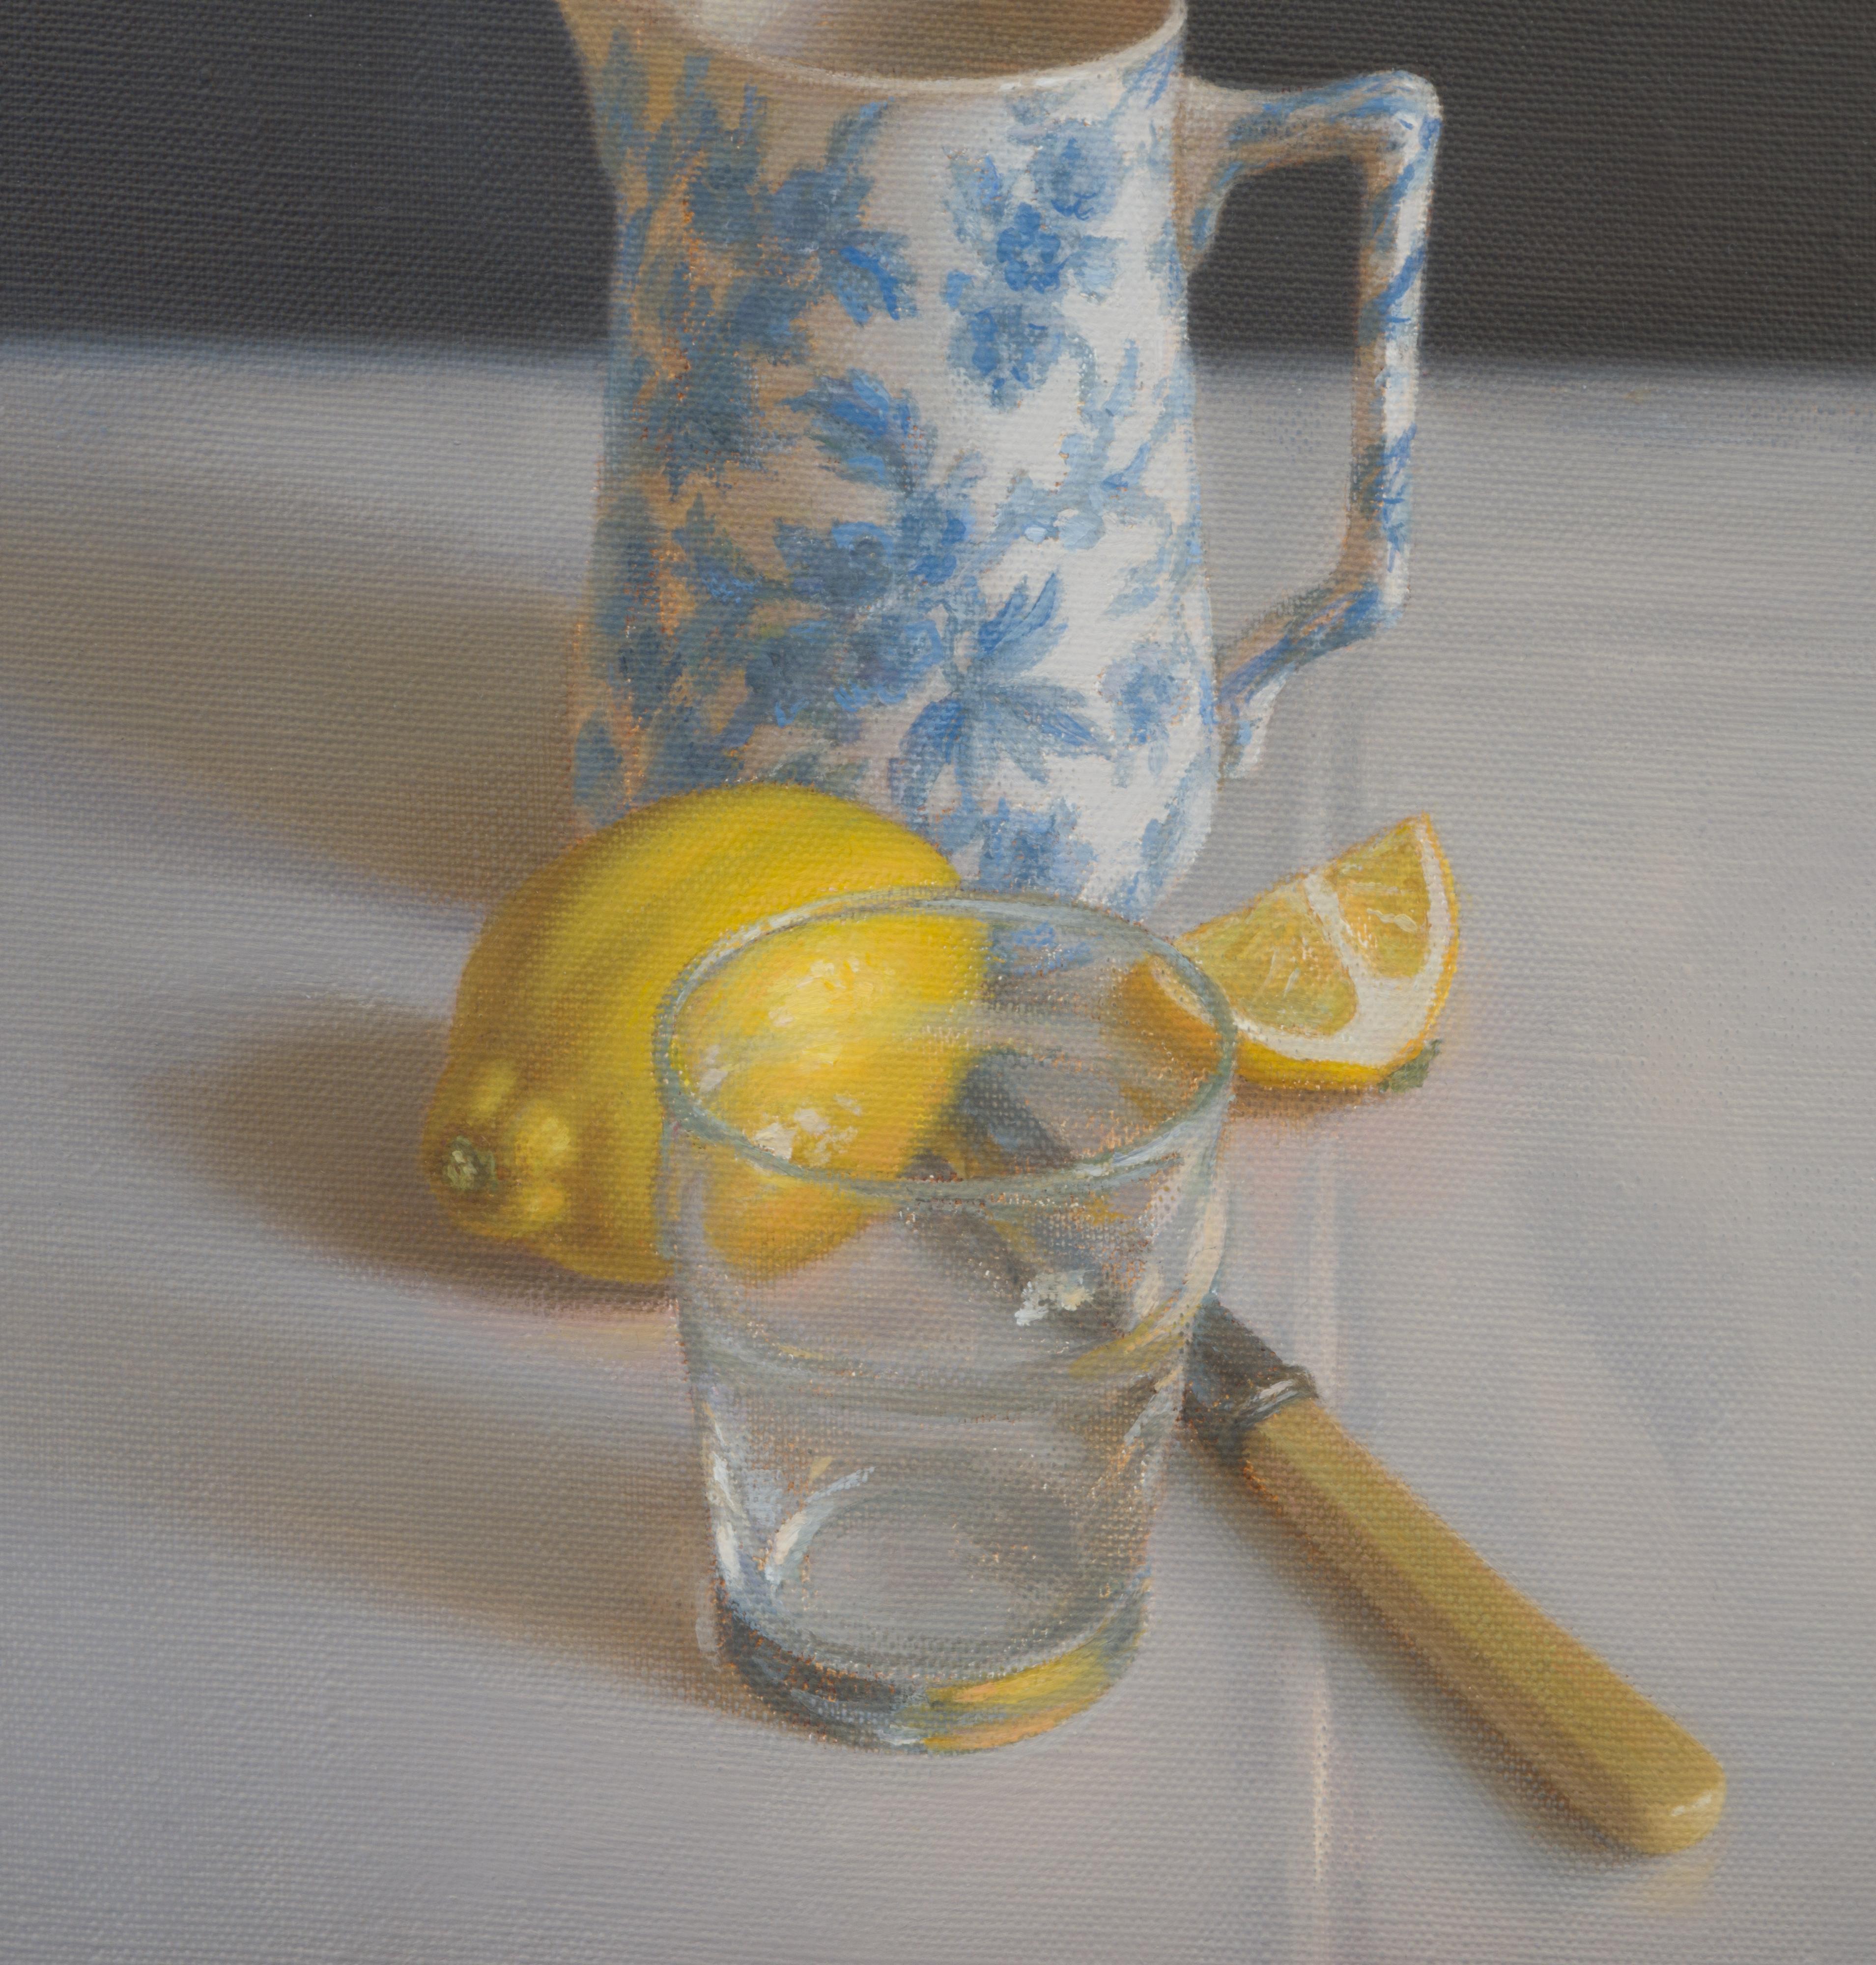 Still life with milk jug and lemon - Painting by Irina Trushkova